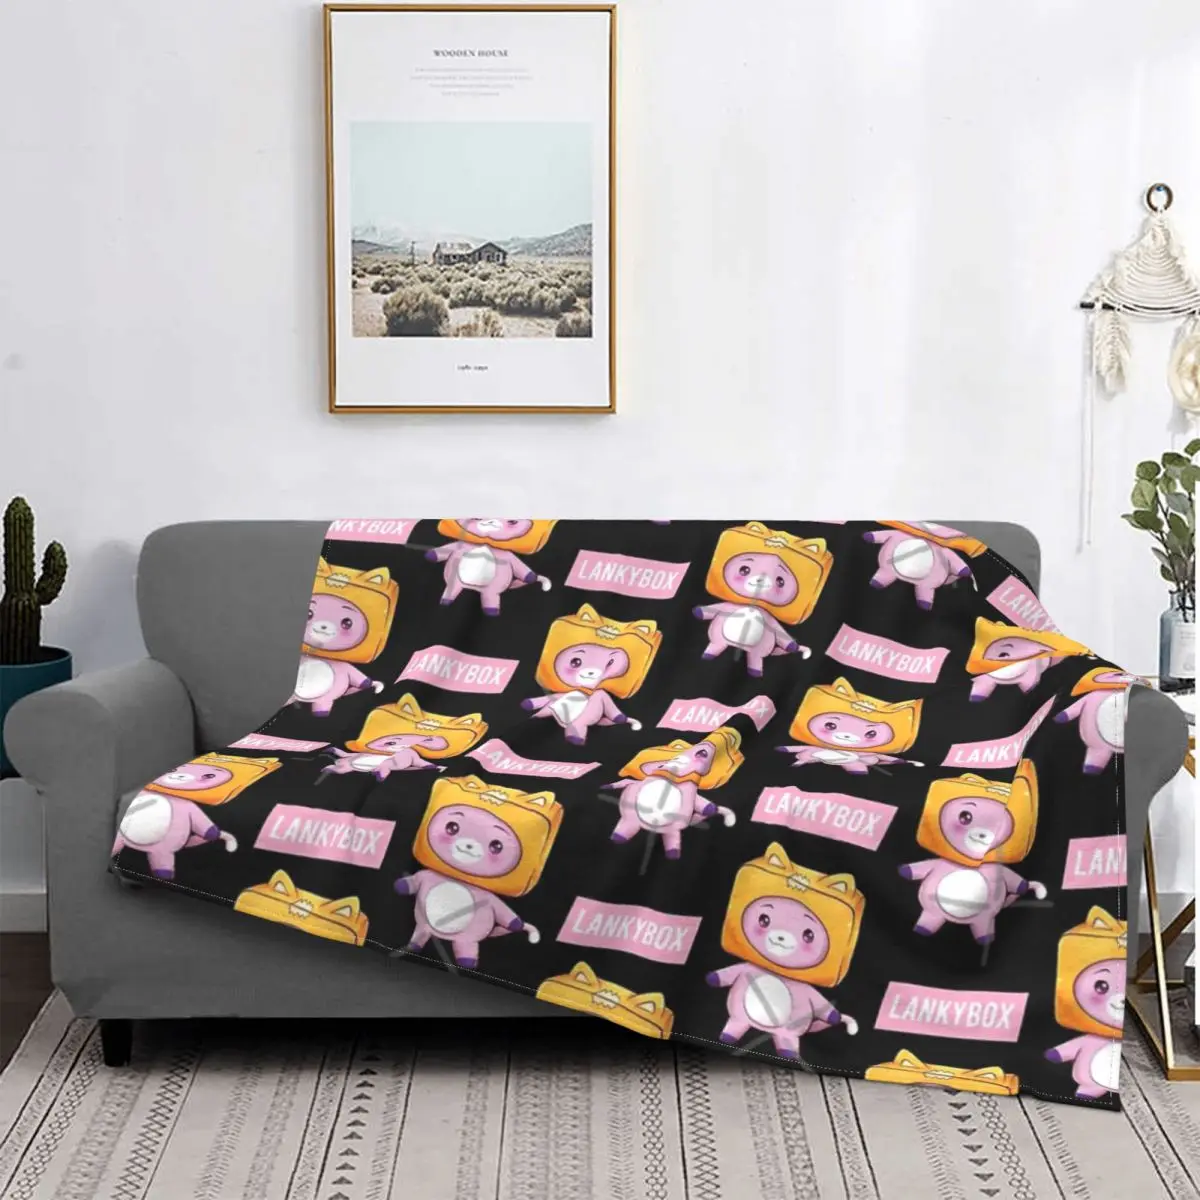 

Lankybox 7 Blanket Bedspread Bed Plaid Bed Linen Anime Plaid Blanket Hoodie Picnic Bedspread